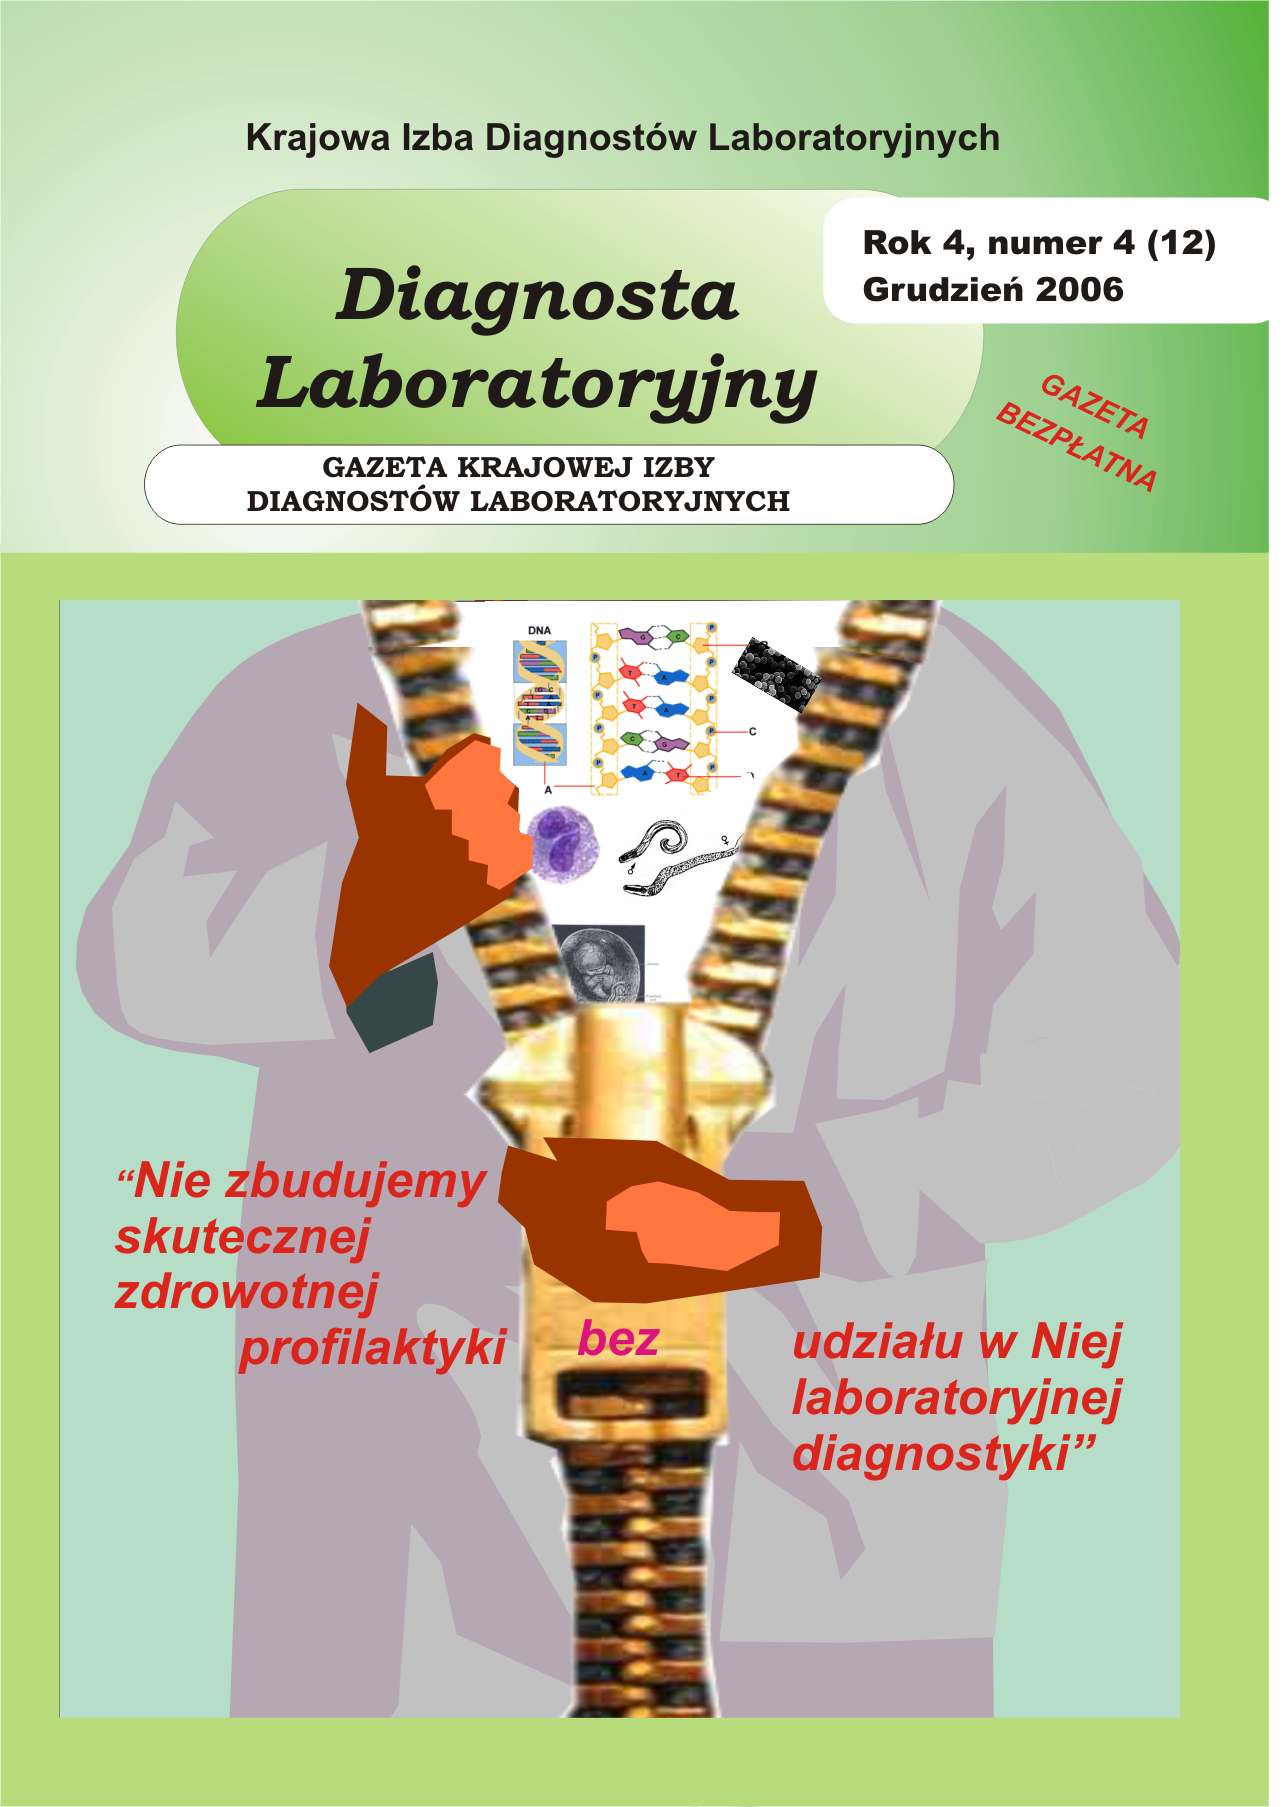 Diagnosta Laboratoryjny - Rok 4, Numer 4 (12) - grudzień 2006 r.